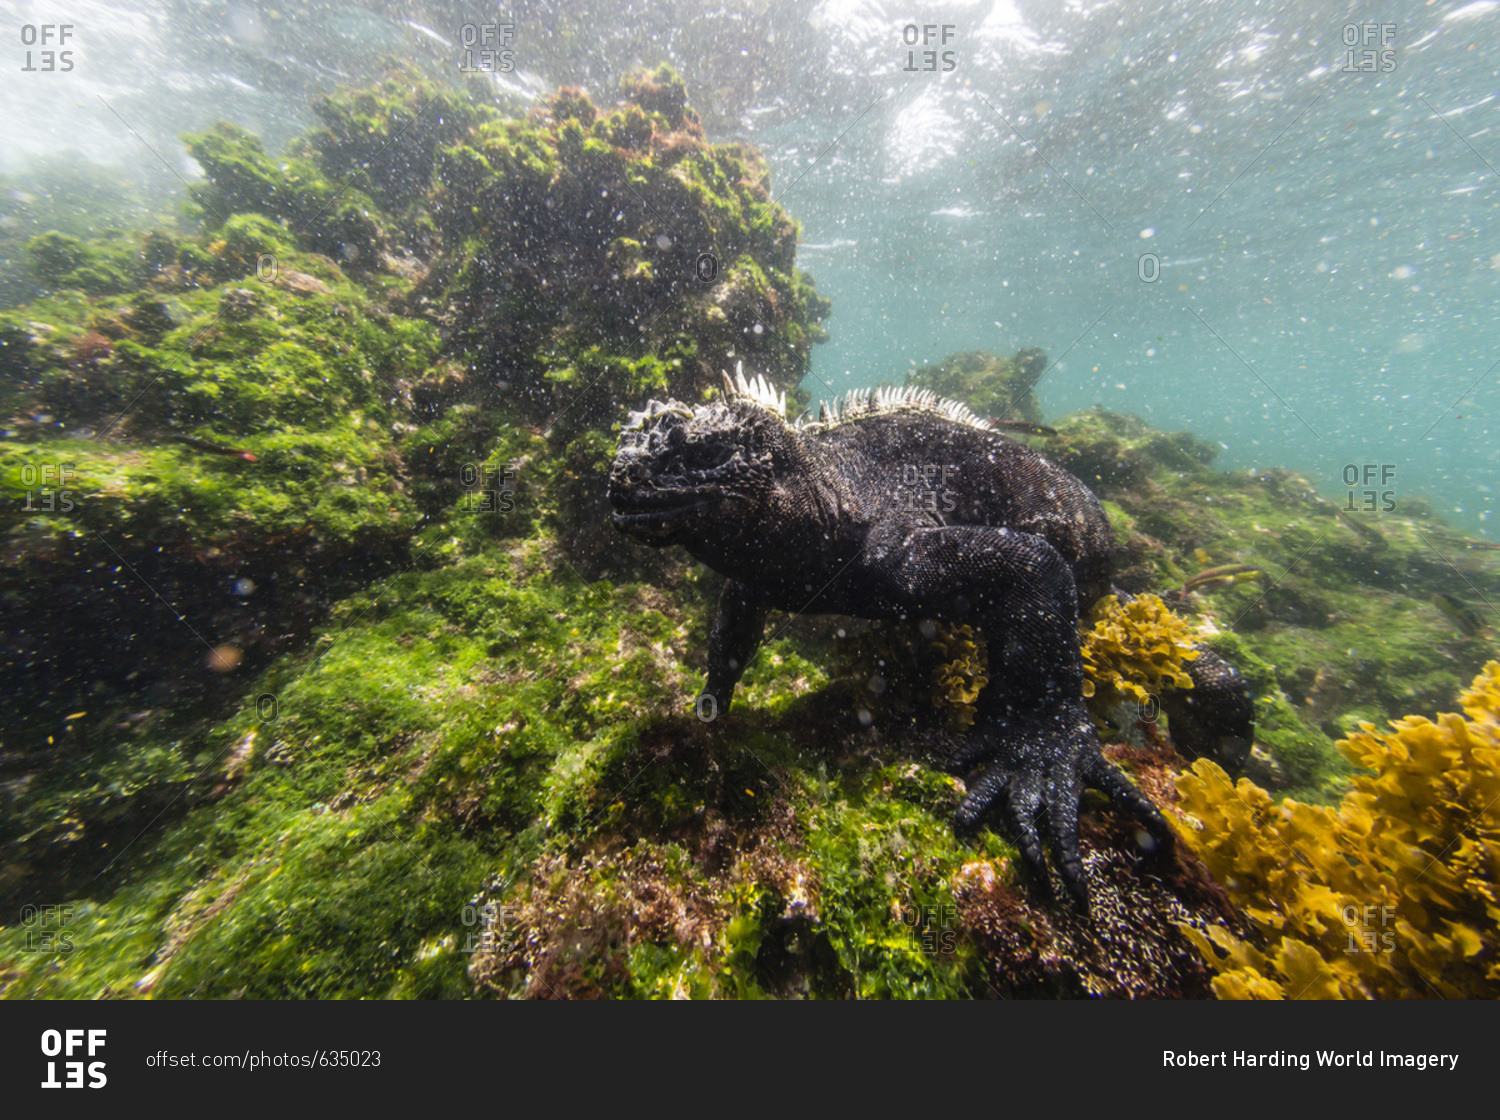 The endemic Galapagos marine iguana (Amblyrhynchus cristatus) feeding underwater, Fernandina Island, Galapagos, UNESCO World Heritage Site, Ecuador, South America